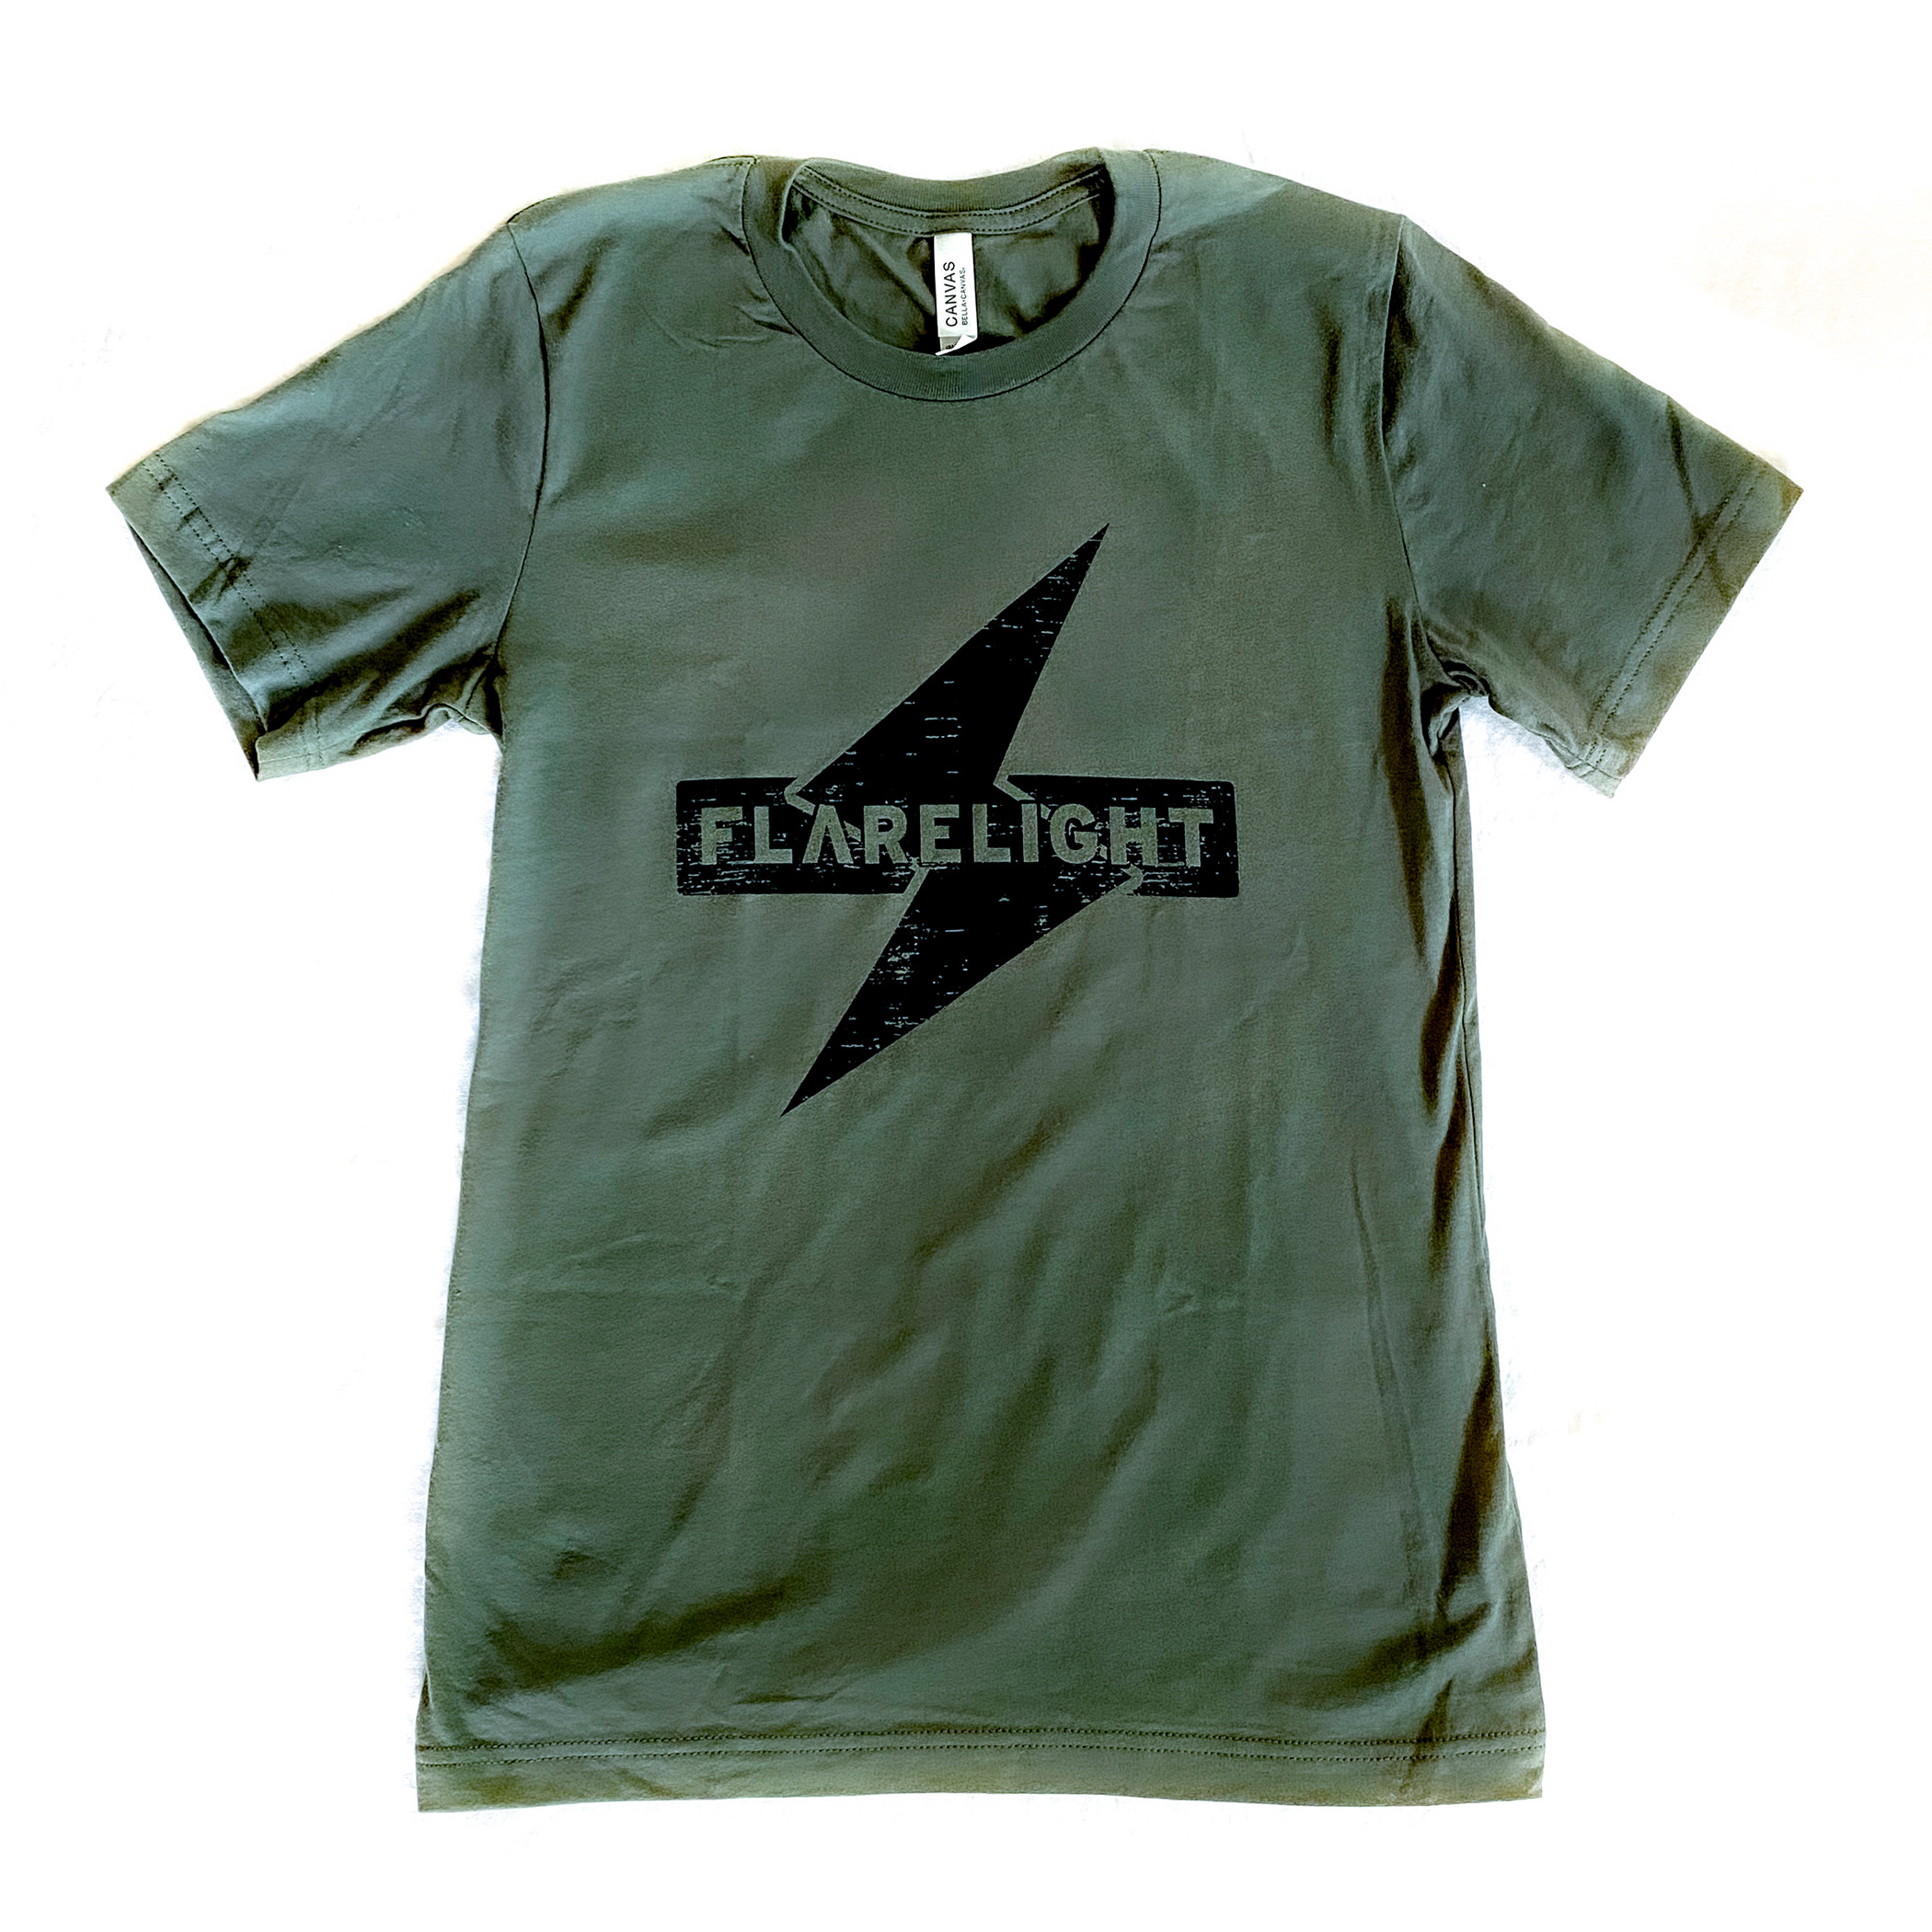 Flarelight logo shirt in military green